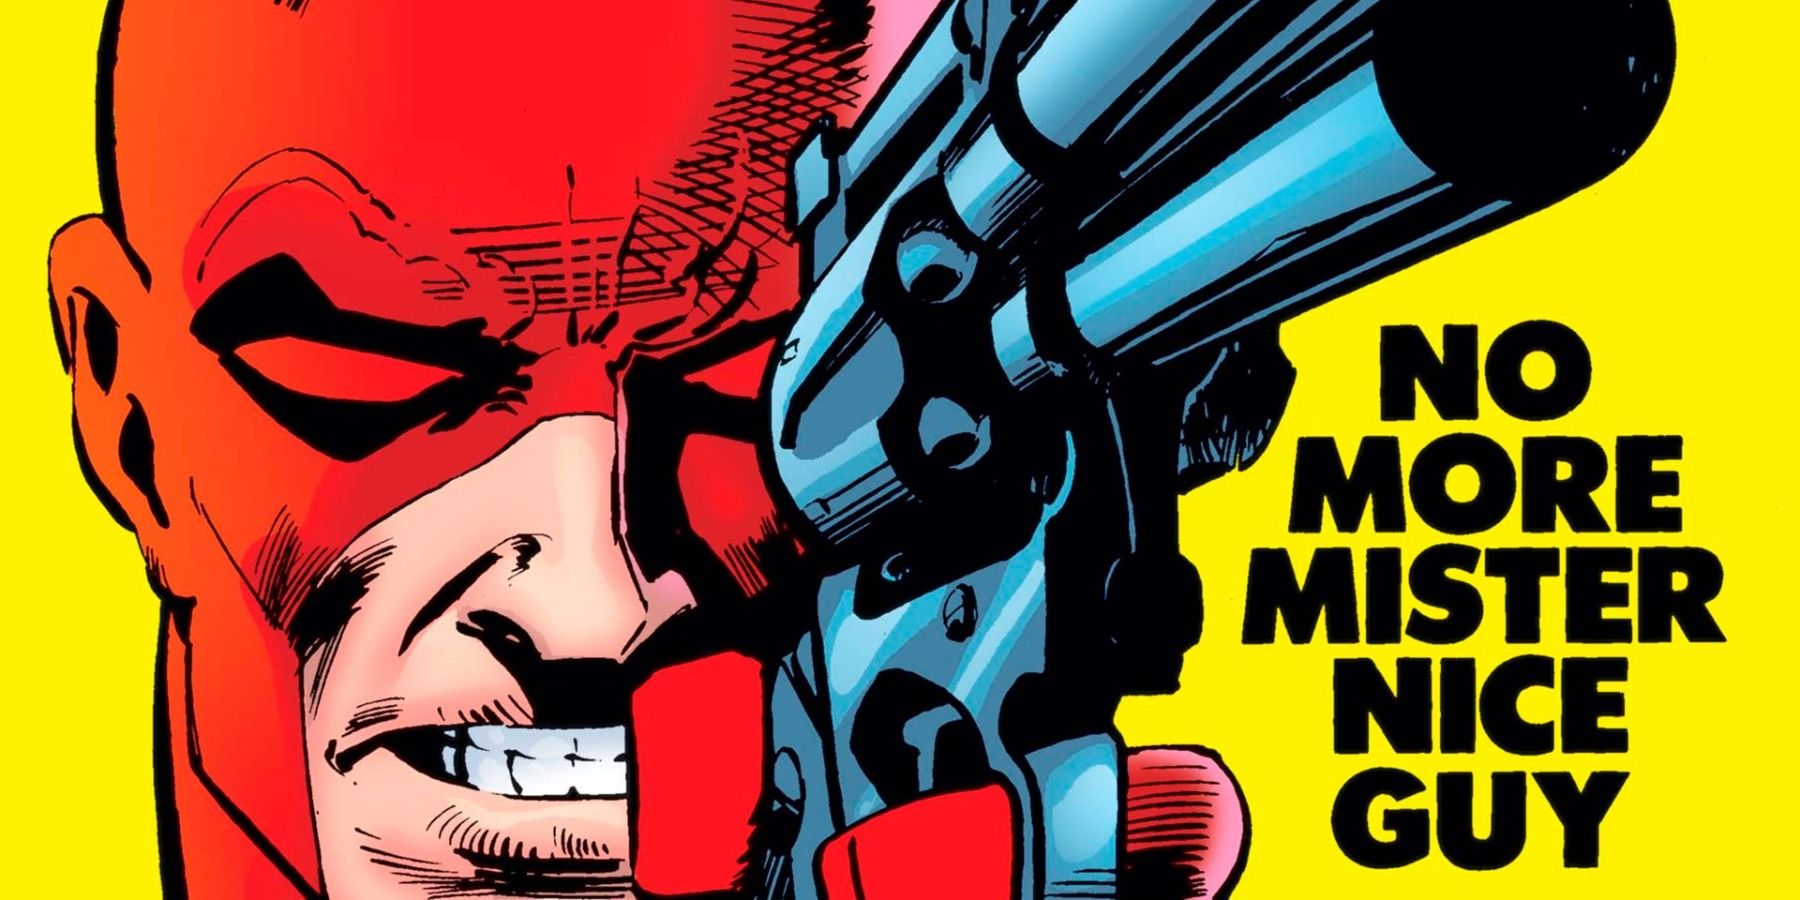 Daredevil #184 cover with the superhero aiming a gun